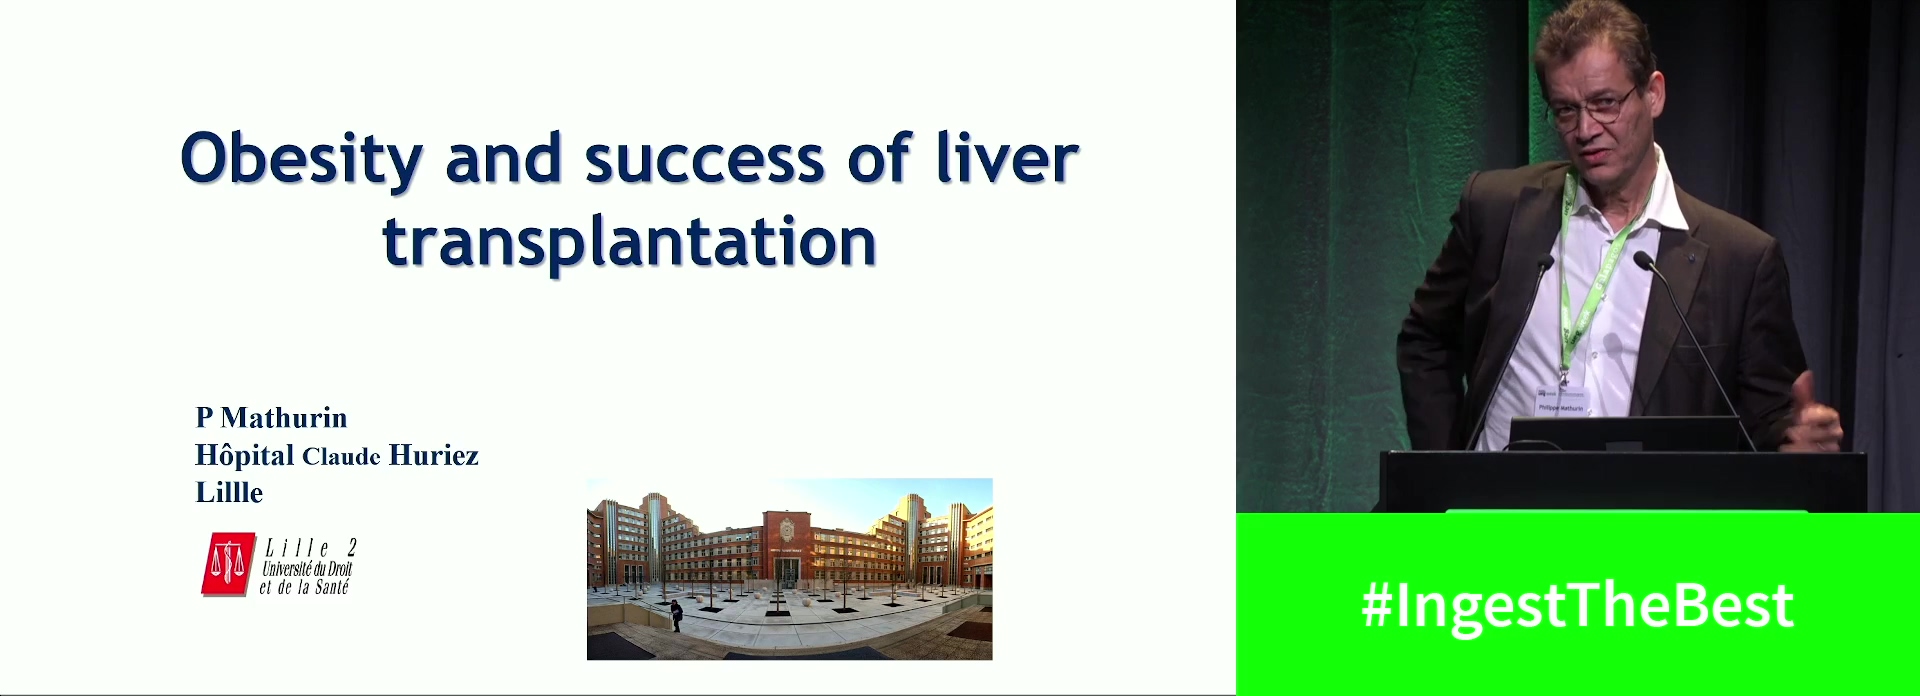 Obesity and success of liver transplantation